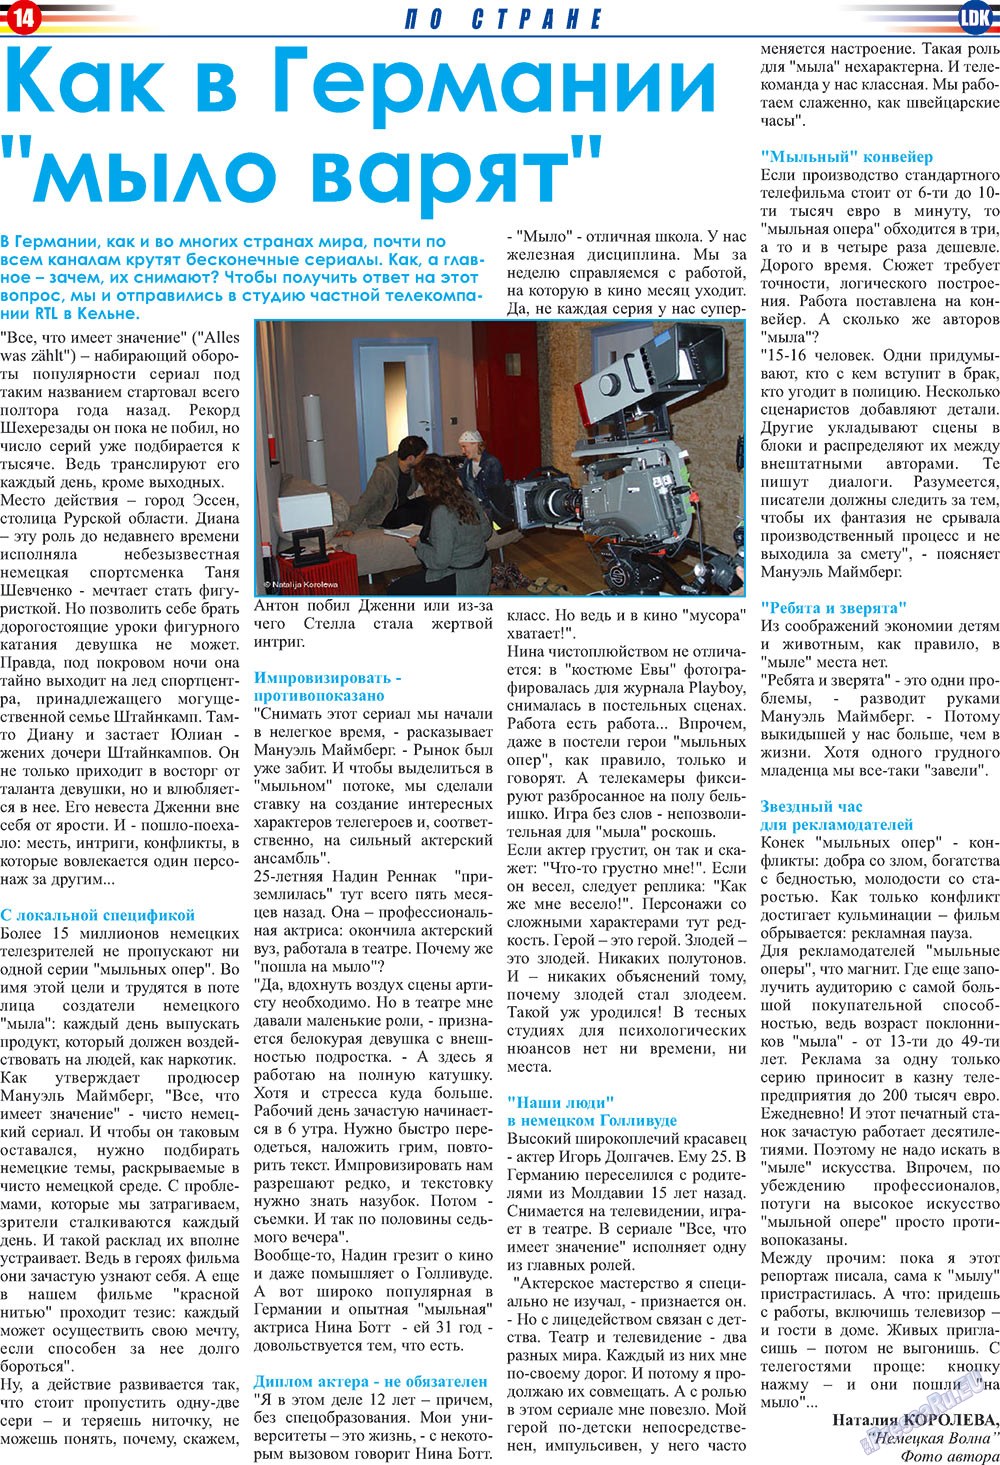 LDK по-русски, газета. 2009 №6 стр.14